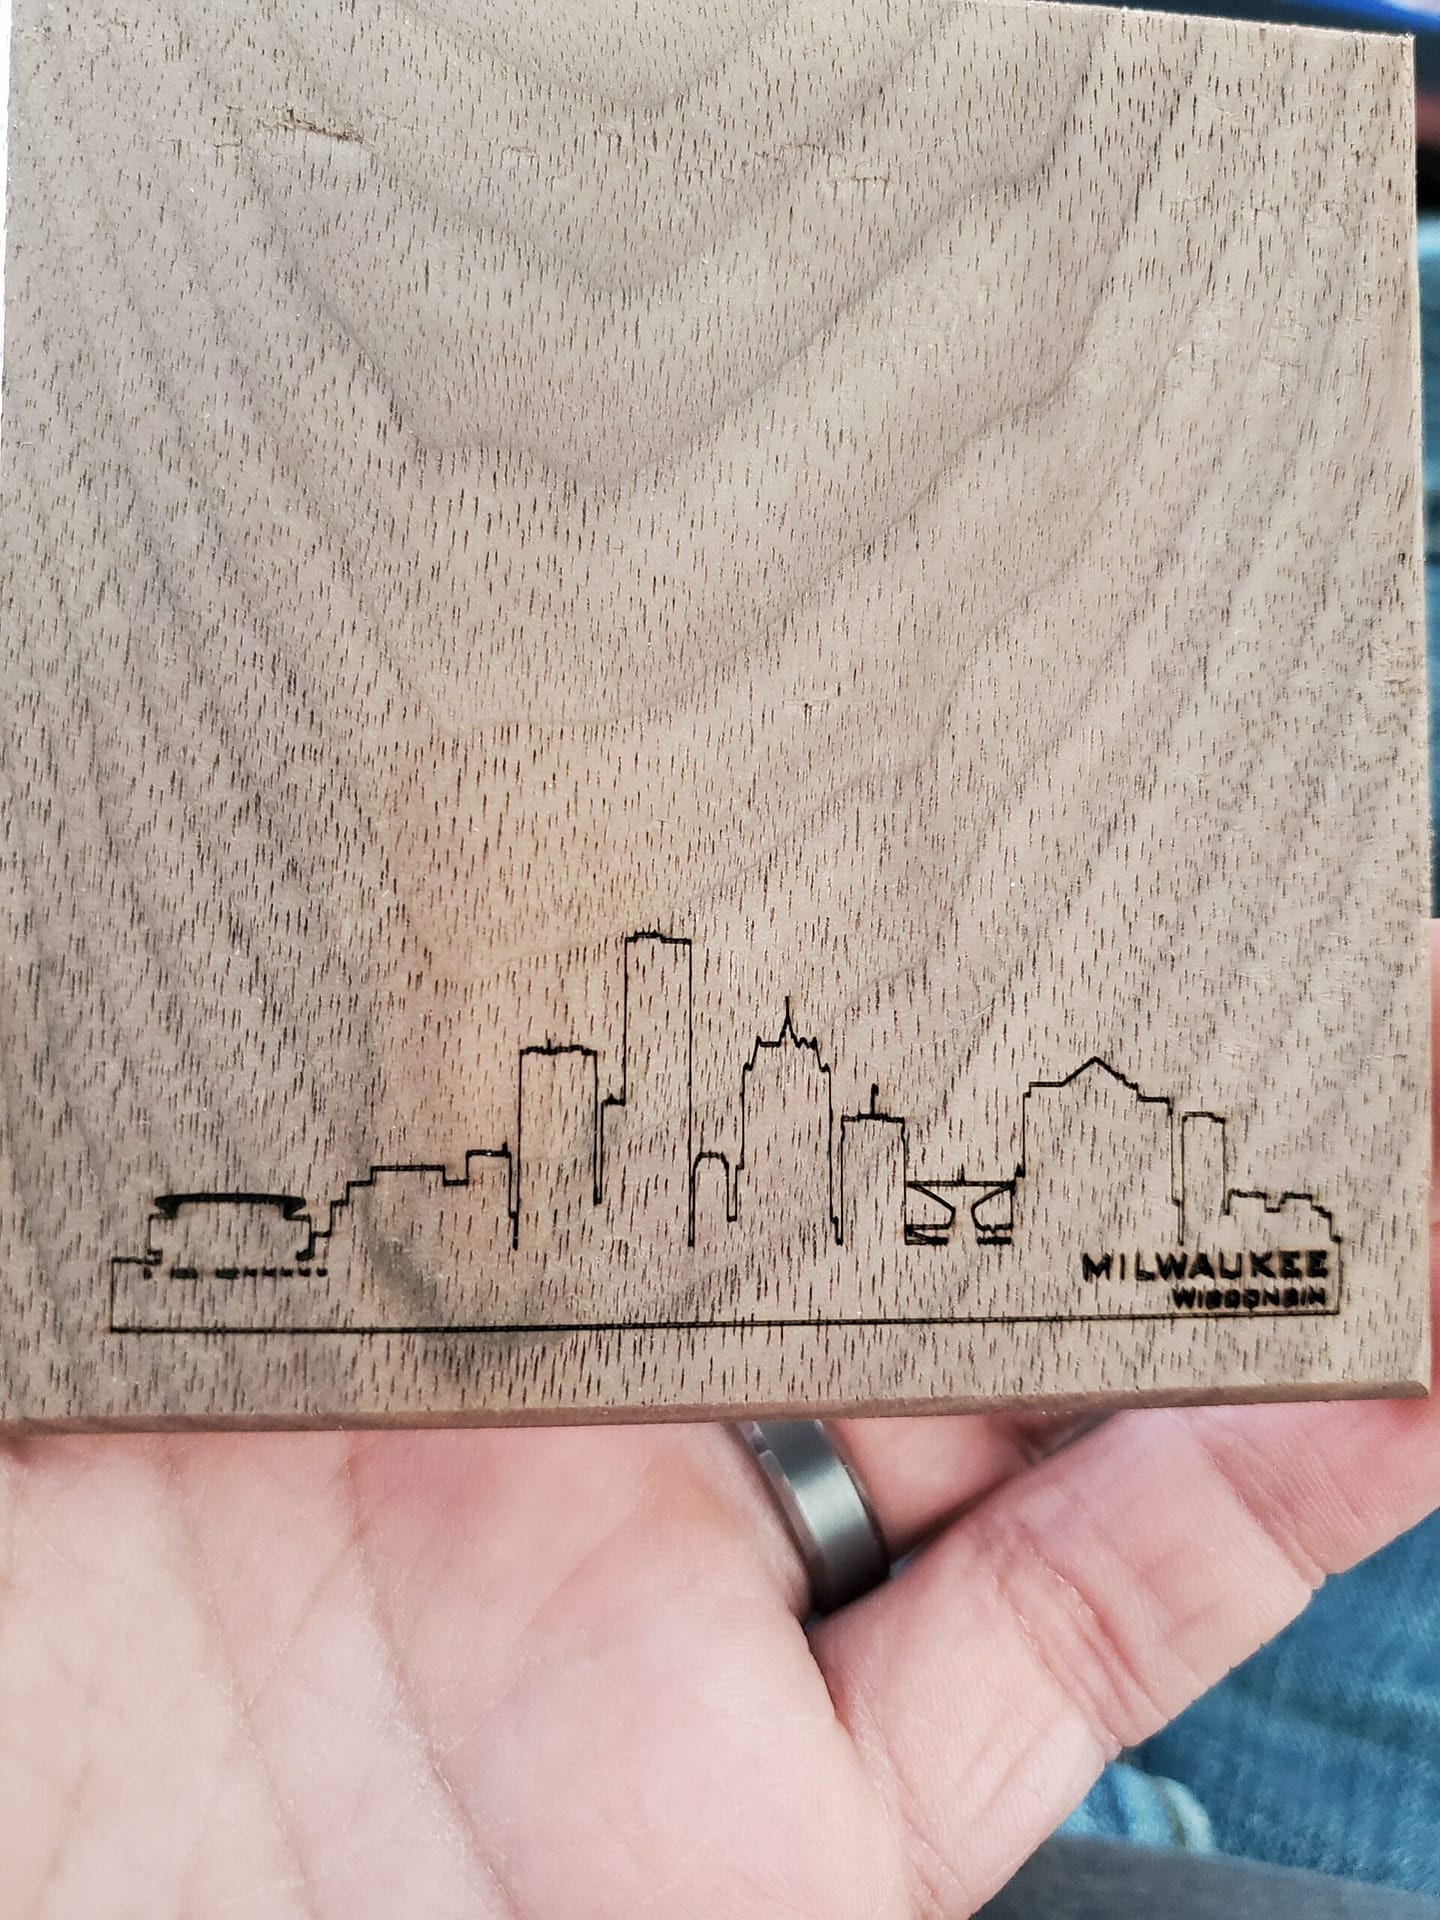 Milwaukee laser engraved coaster